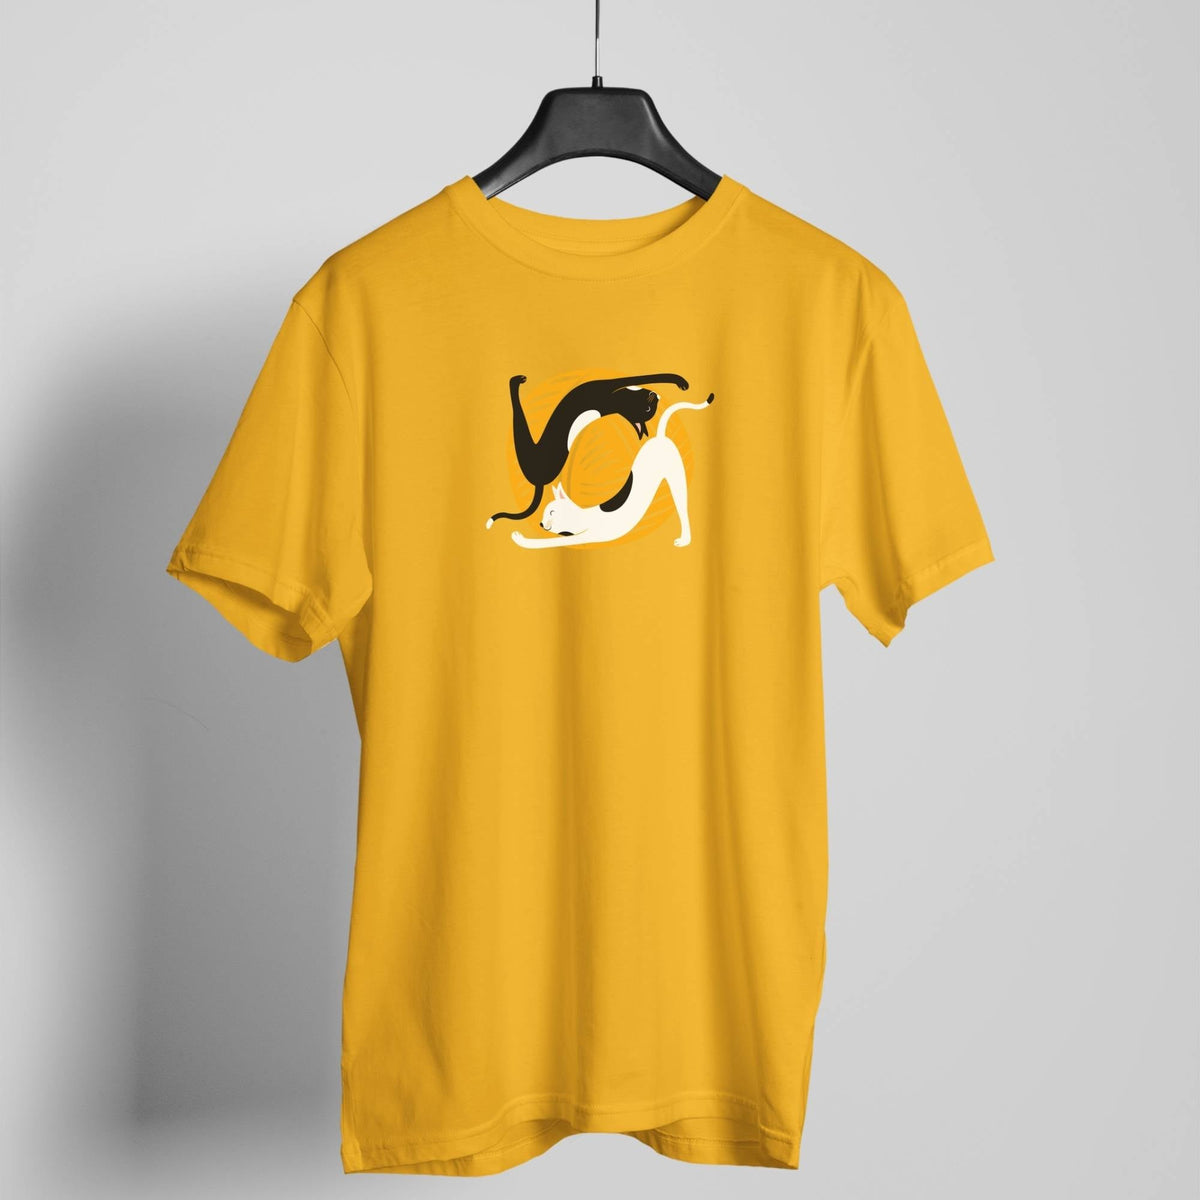 Yoga Cat golden yellow t-shirt